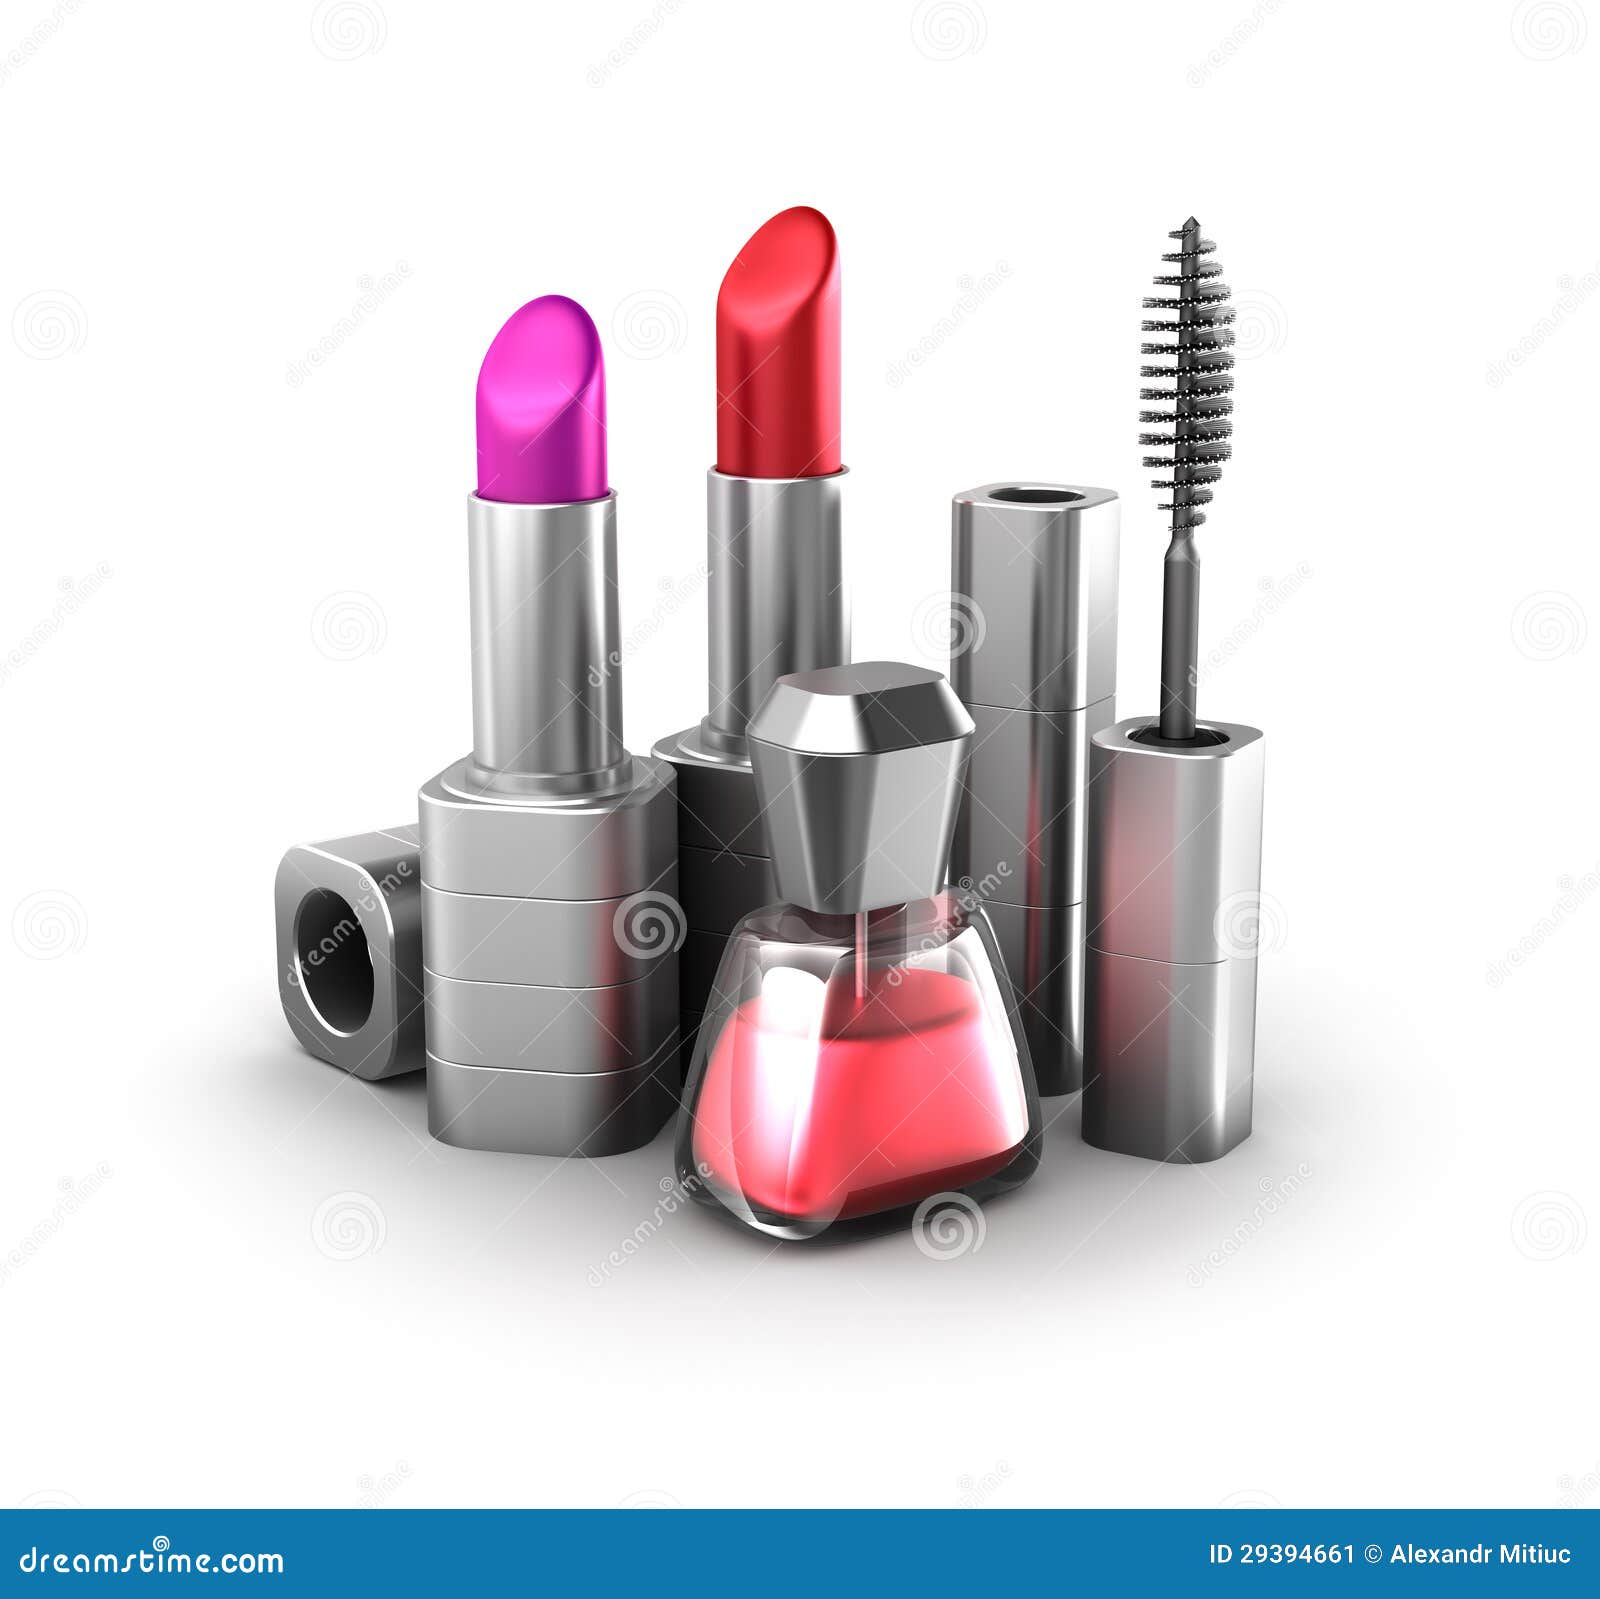 beauty products: lipstick, nail polish and mascara